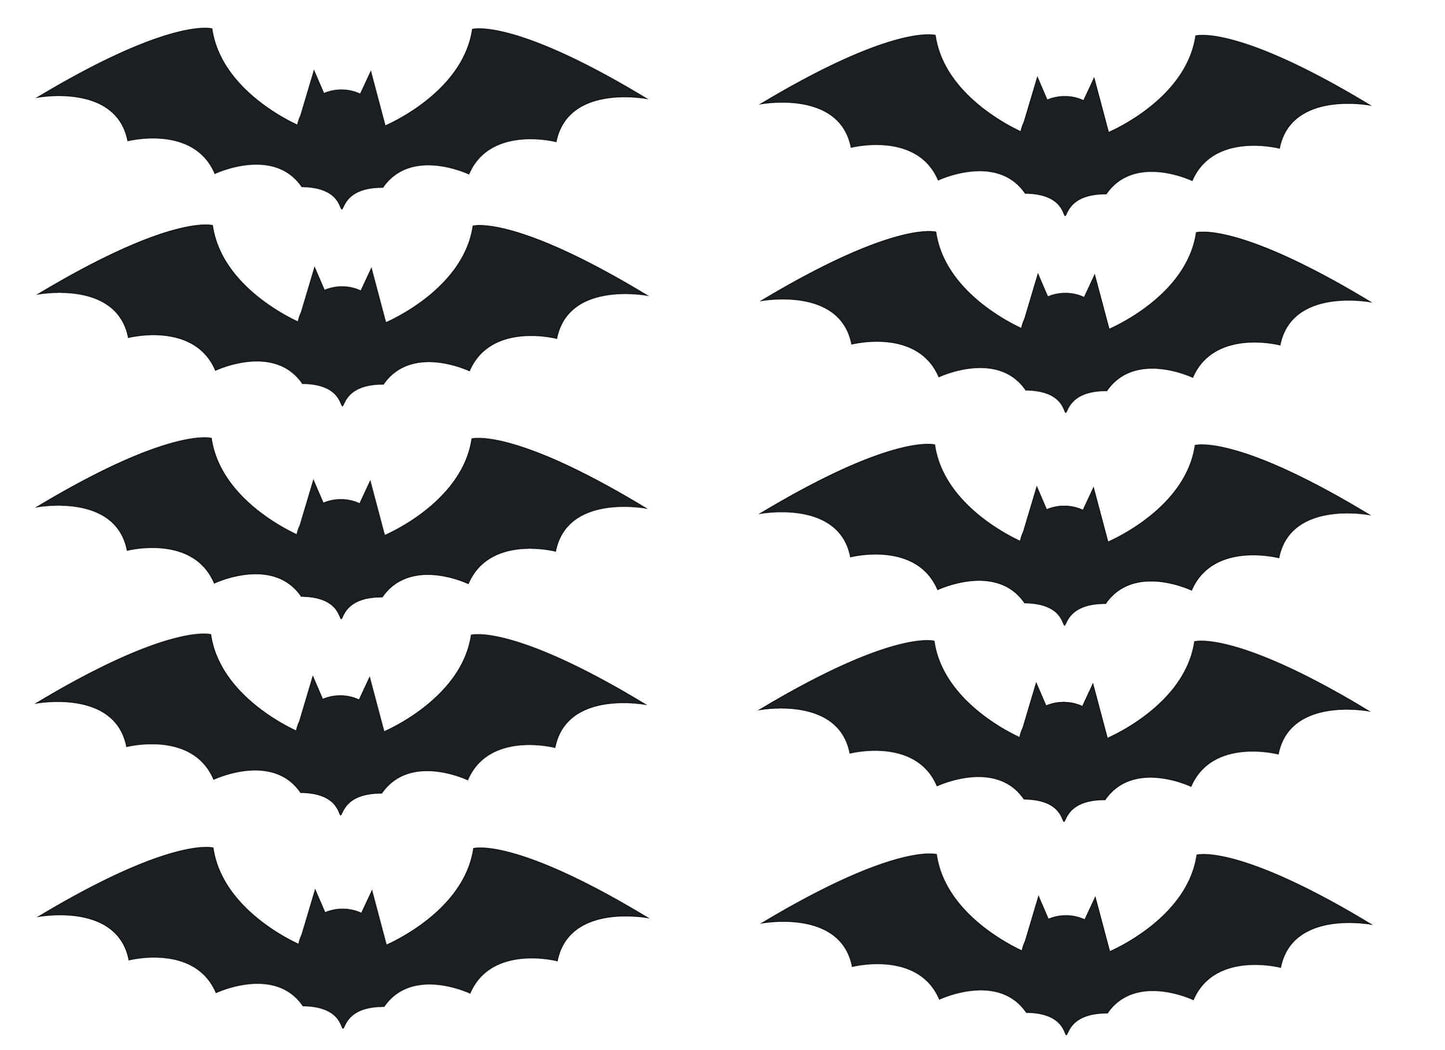 10 Flying Bats Halloween Window Stickers Decorations, Halloween Decor, Bat Stickers, Halloween Decals, Halloween Ideas